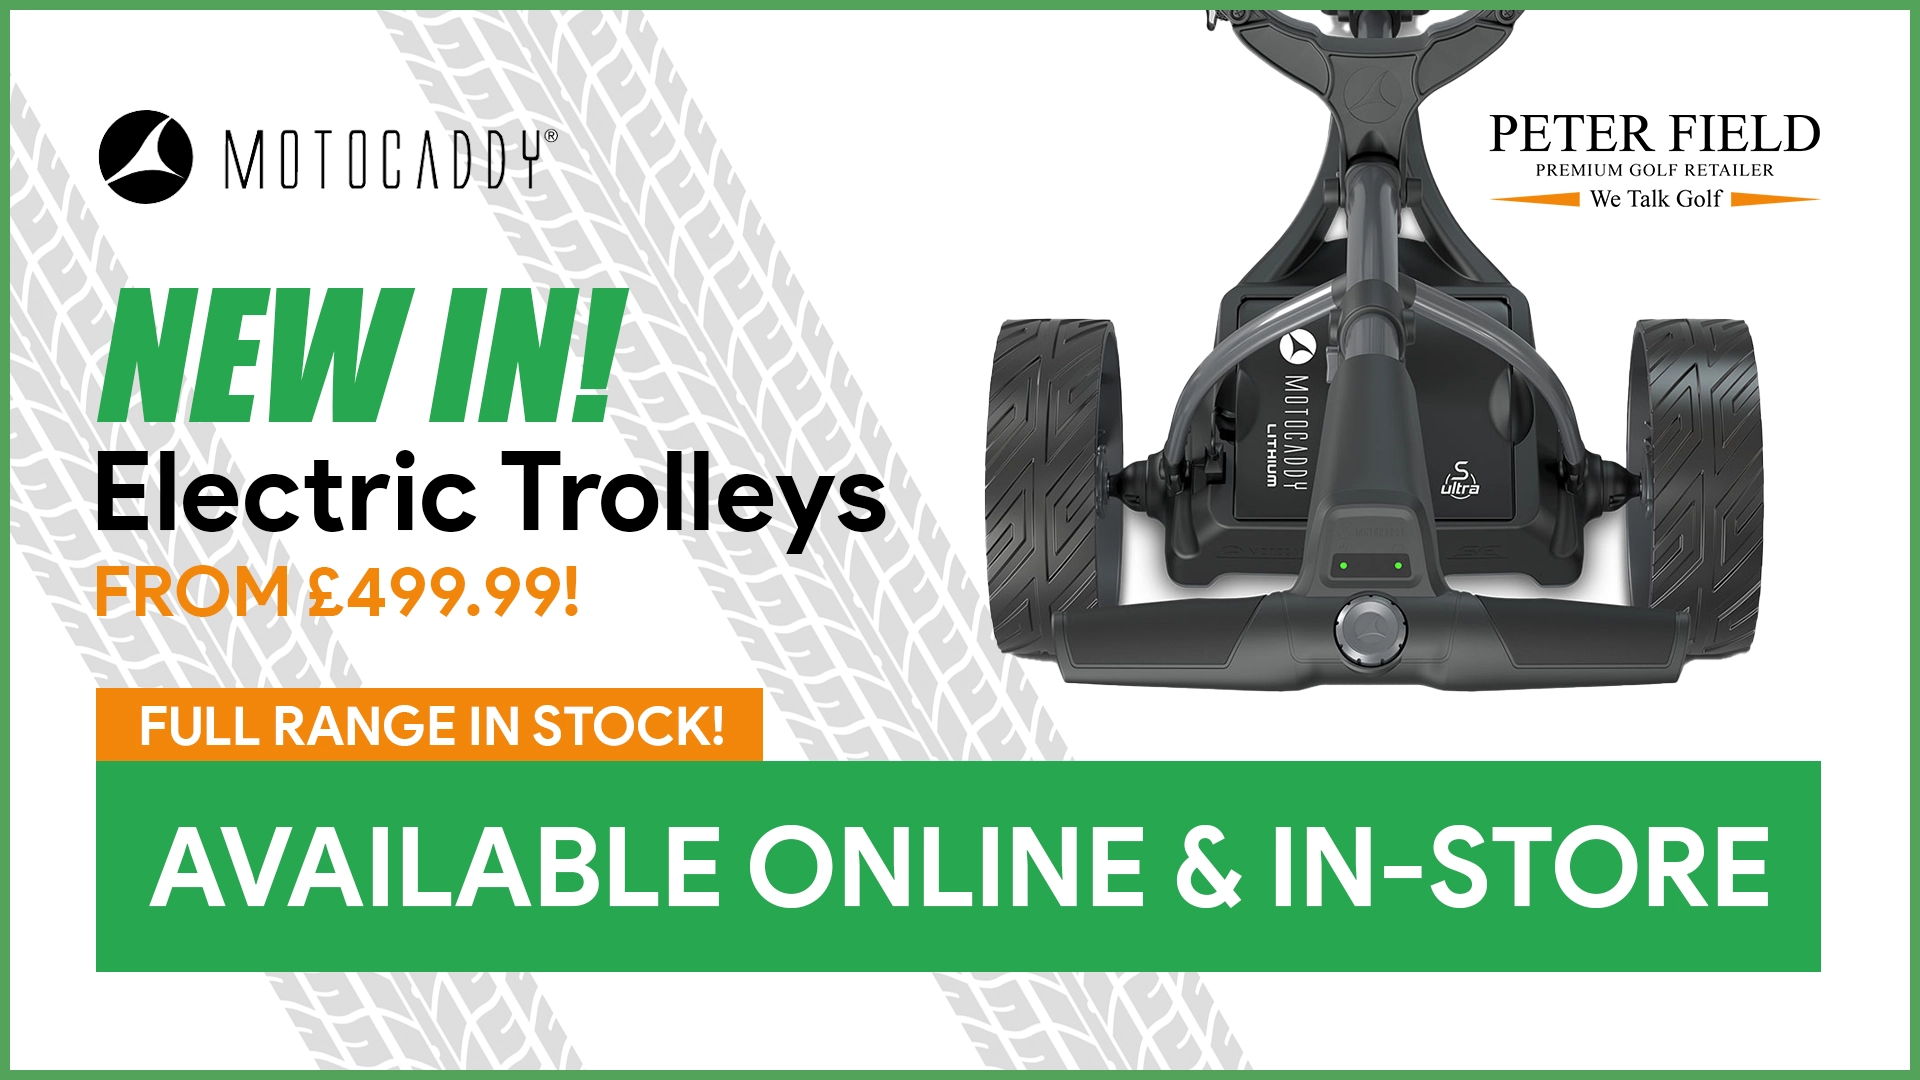 MotoCaddy-New-In-Electric-Trolleys-SE copy